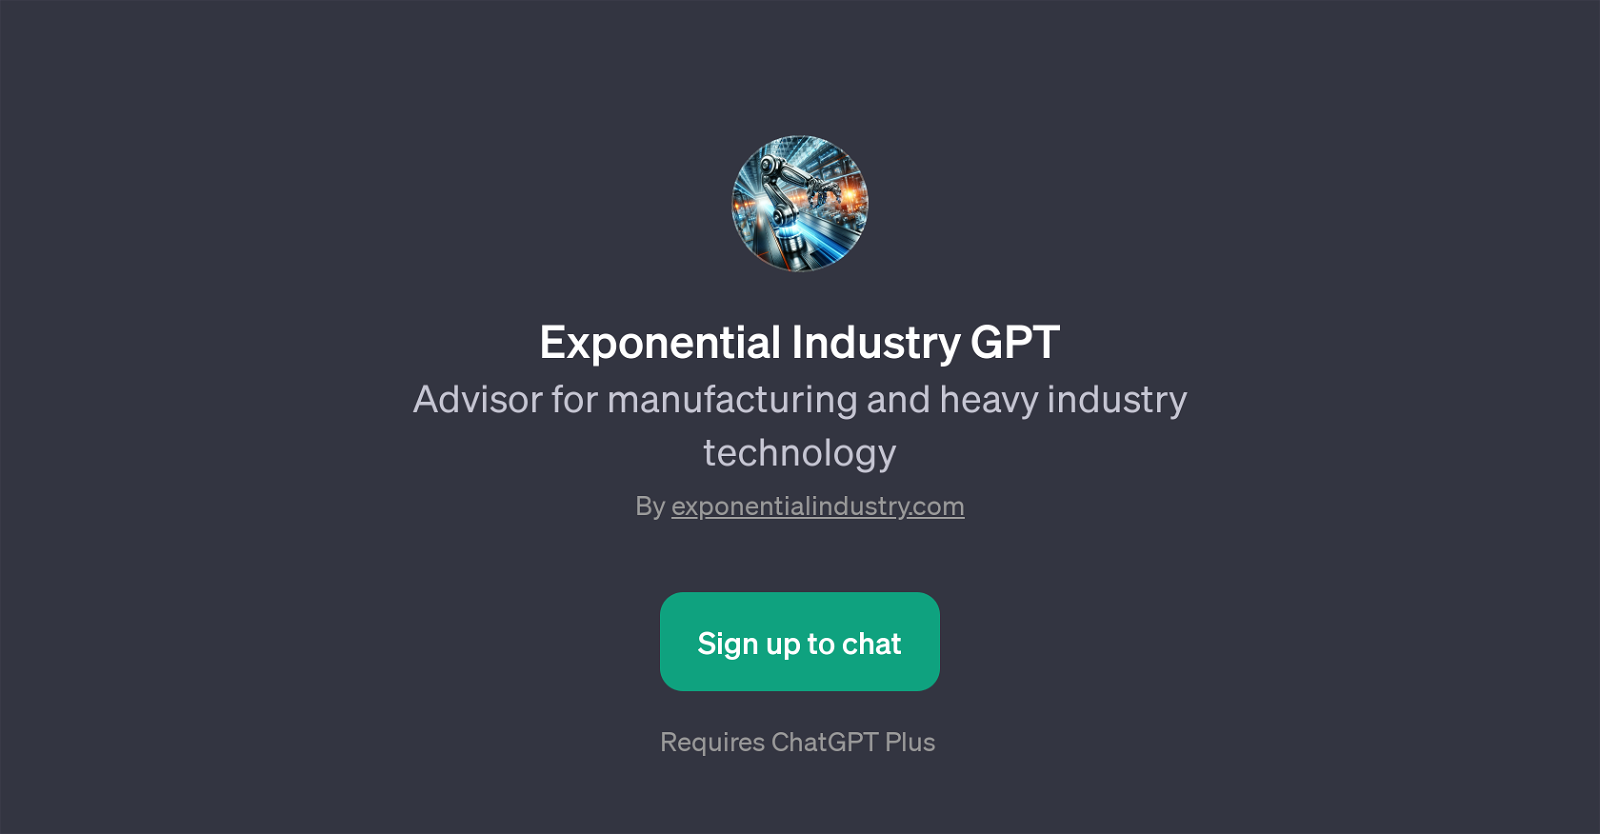 Exponential Industry GPT website